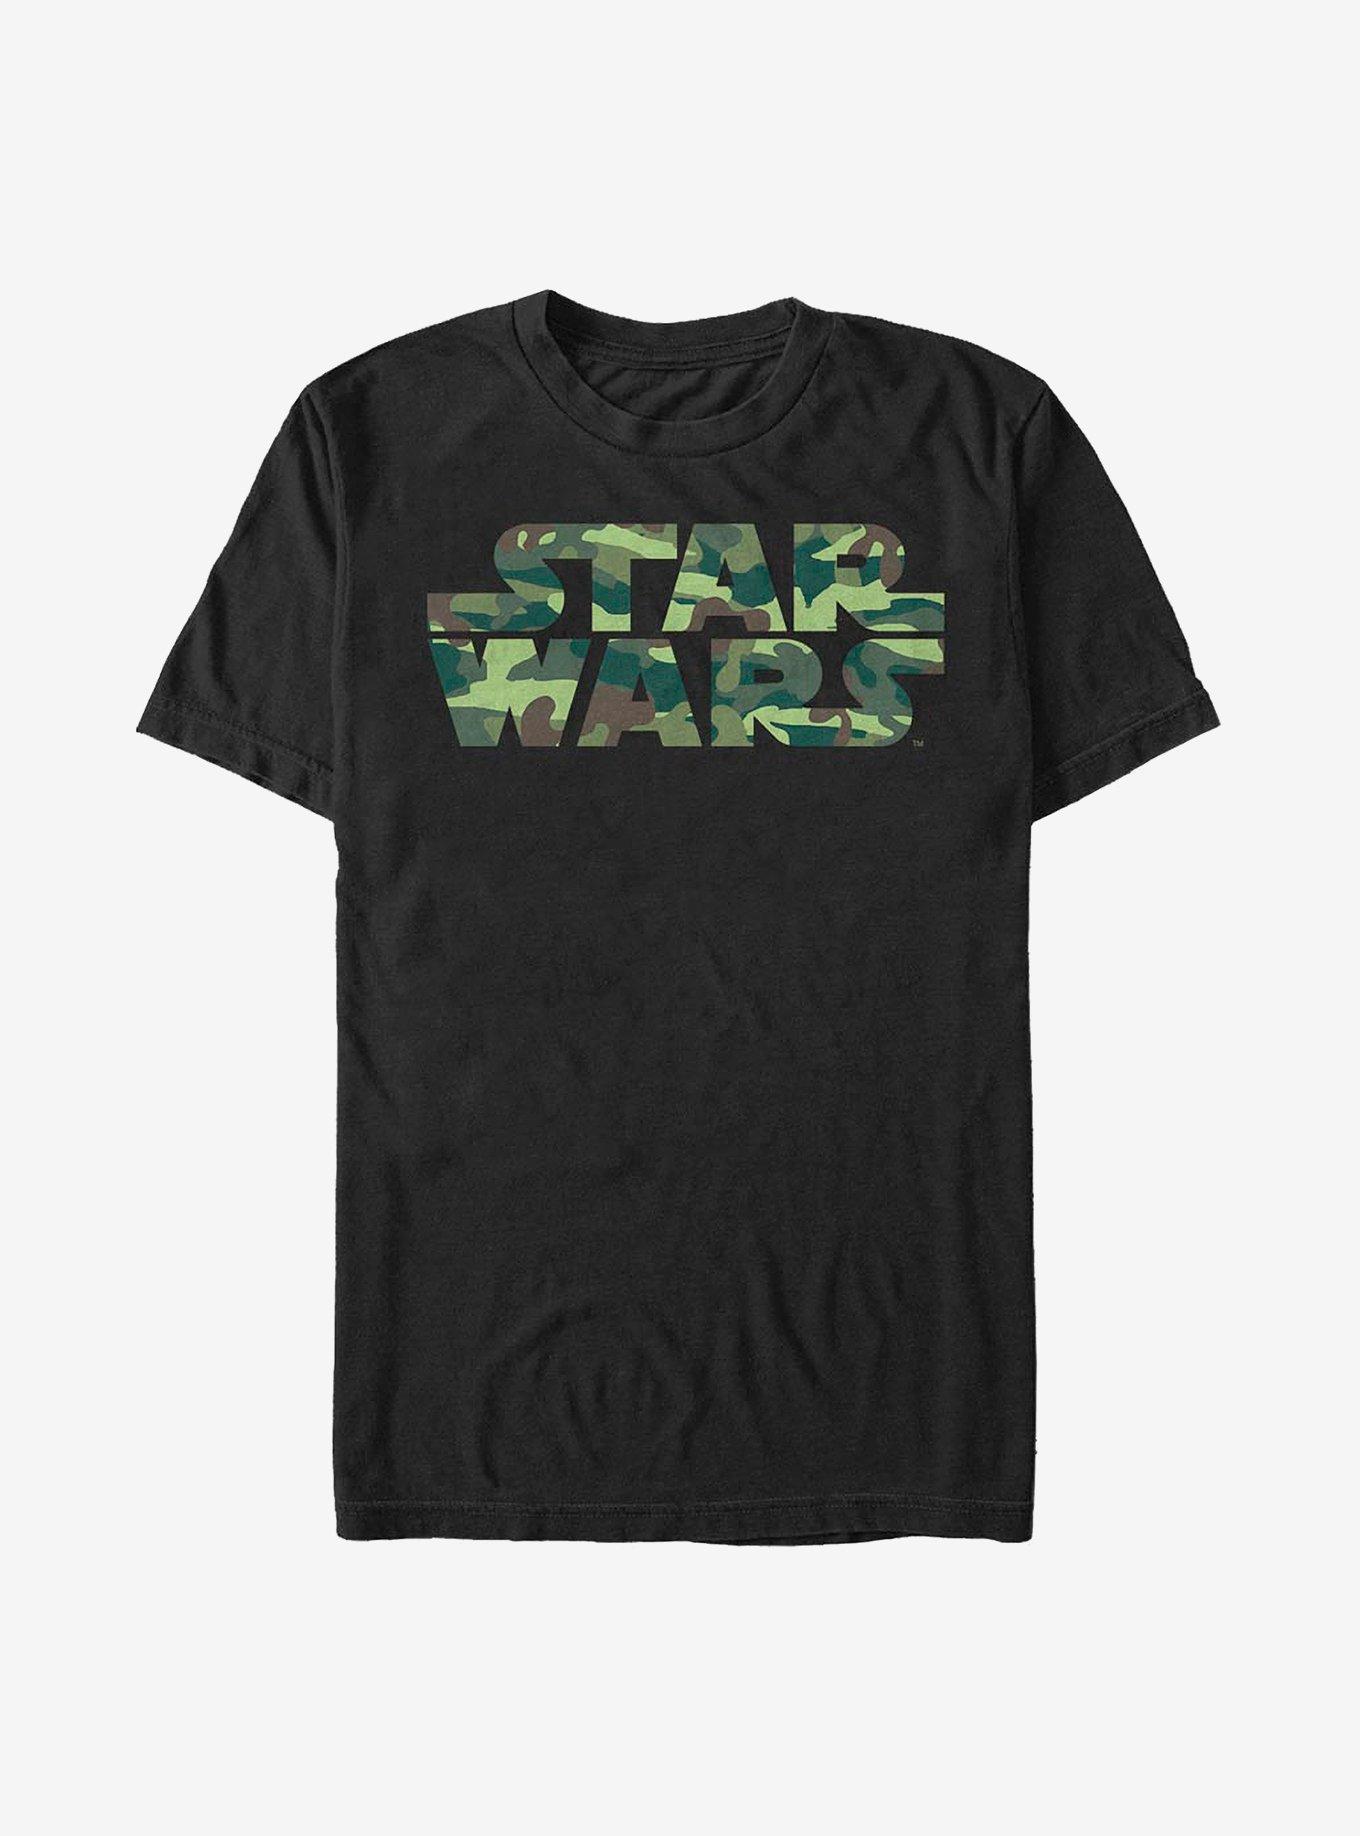 Star Wars Camouflage Logo T-Shirt, BLACK, hi-res